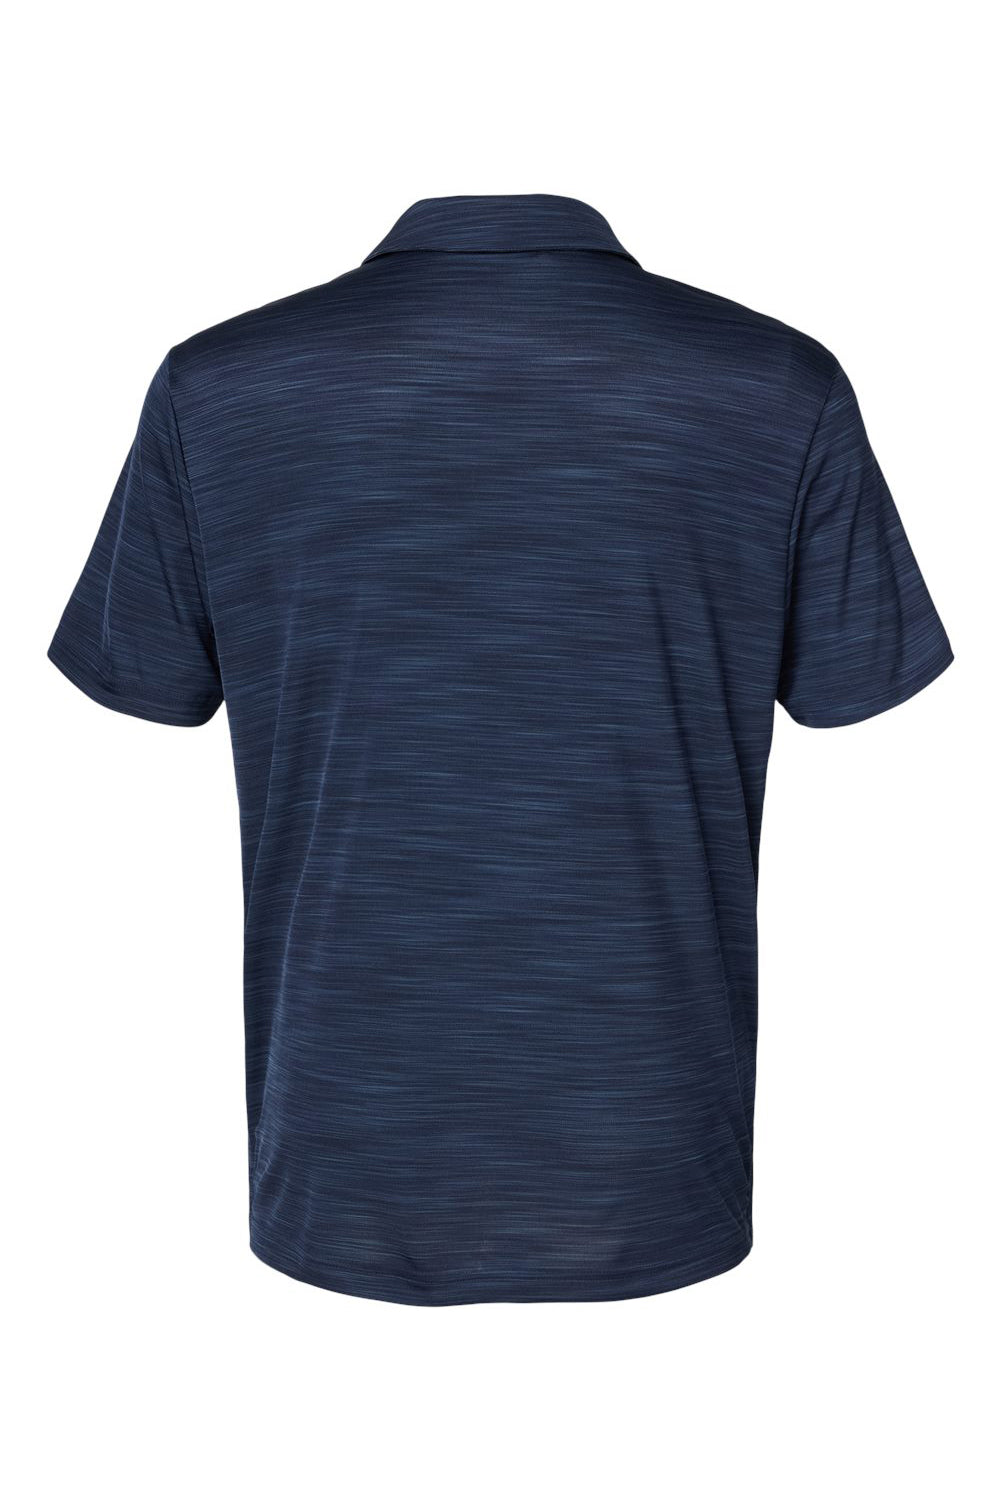 Adidas A402 Mens Melange Short Sleeve Polo Shirt Collegiate Navy Blue Melange Flat Back